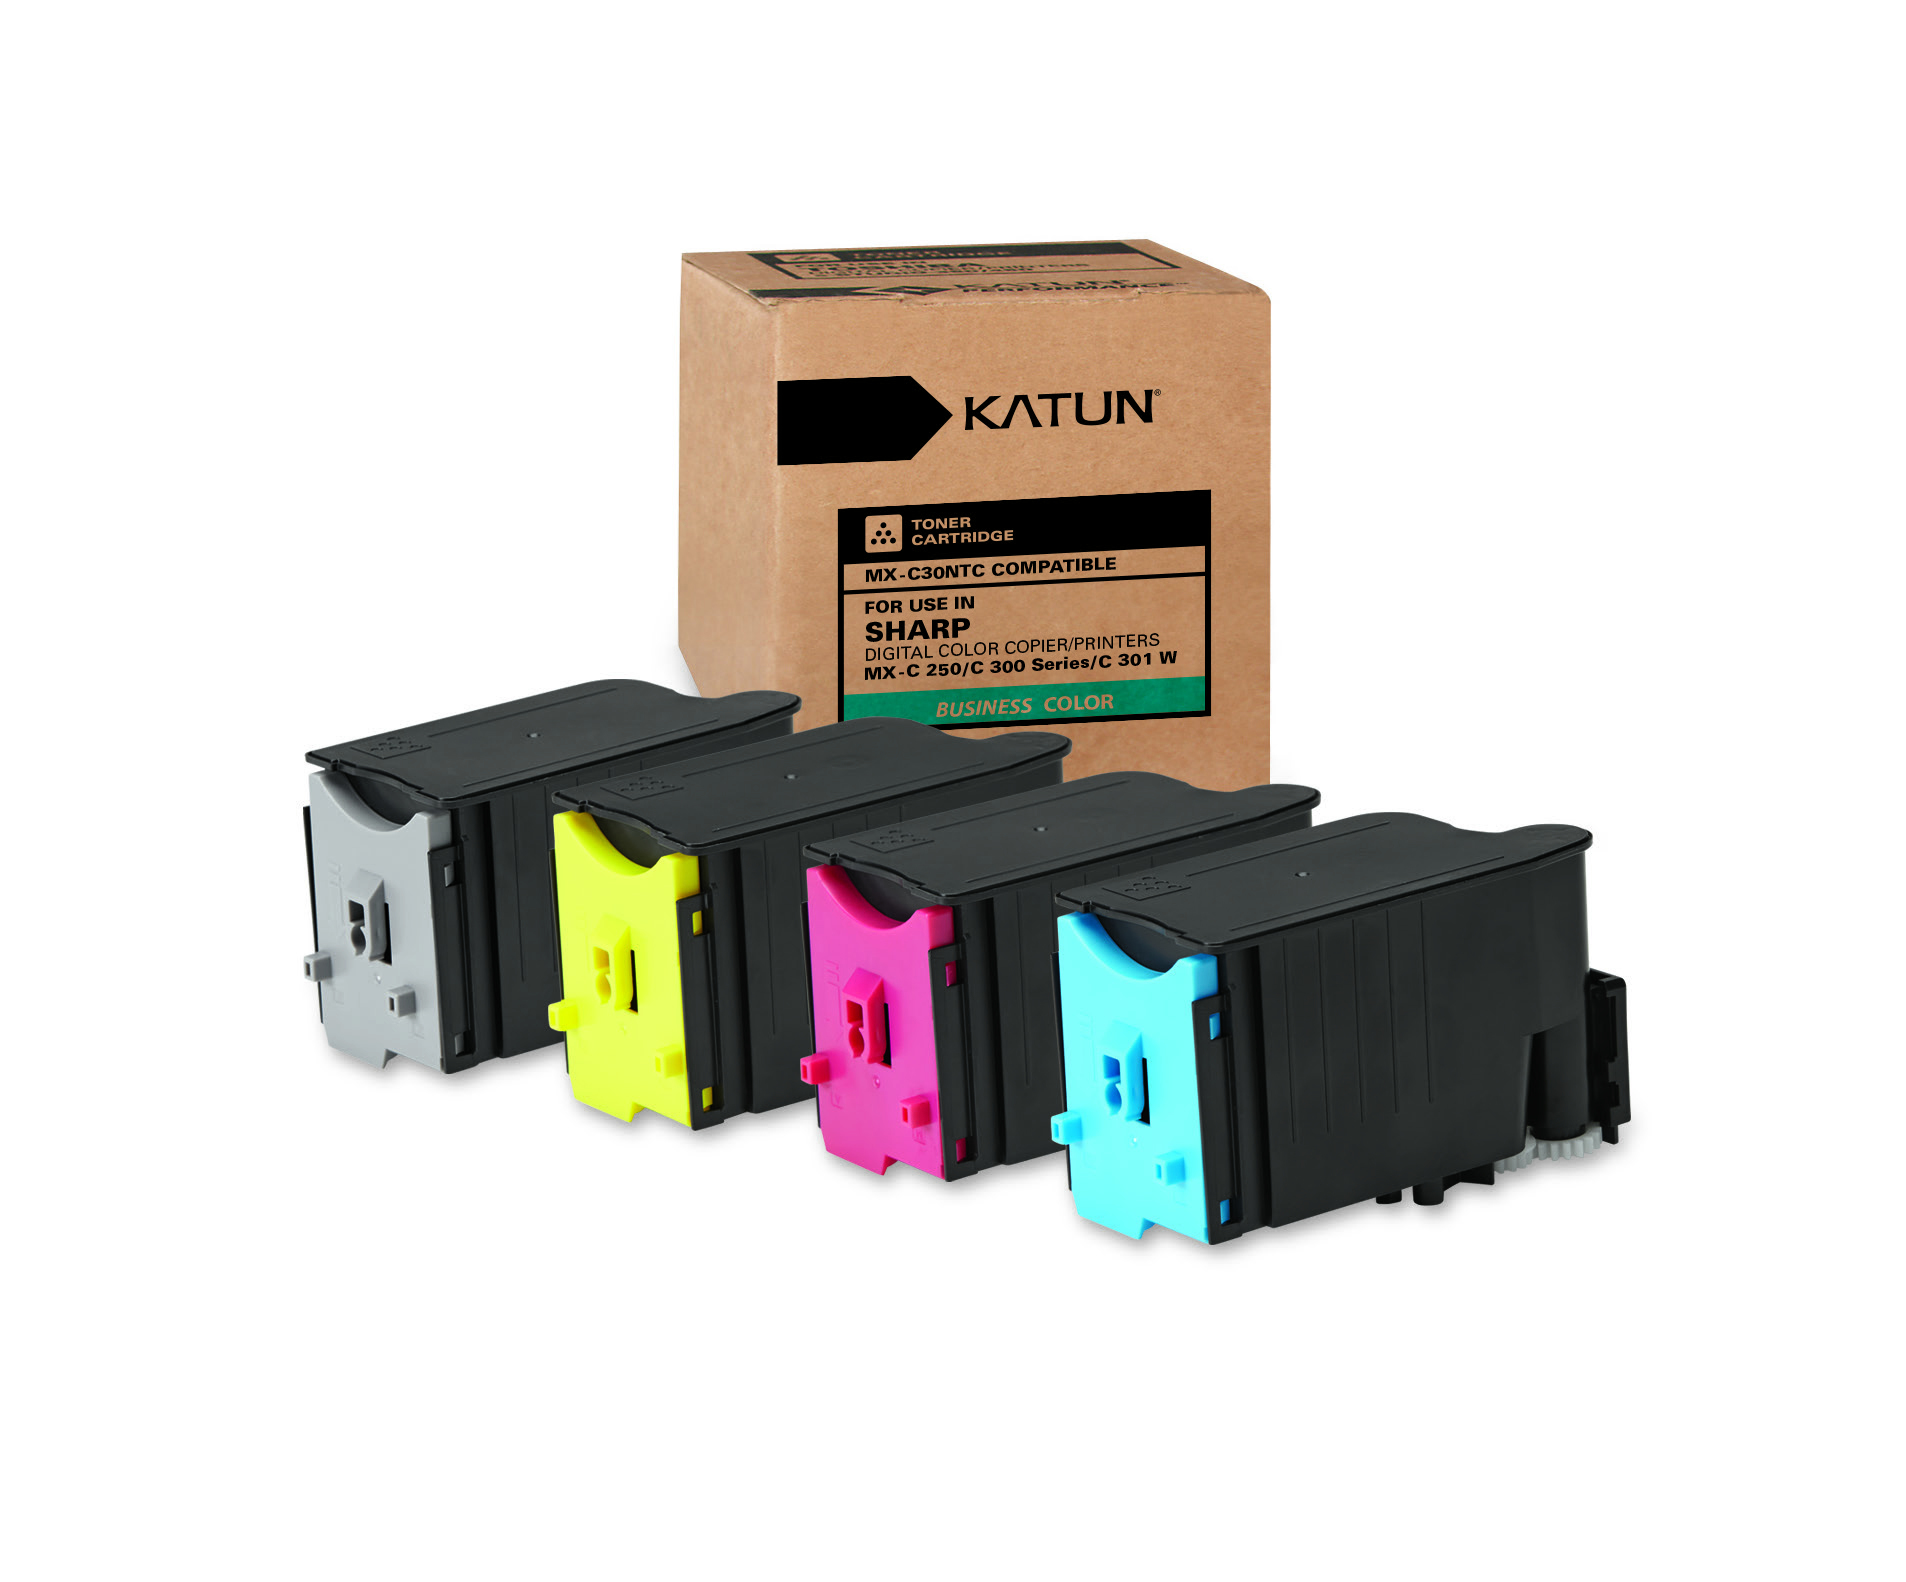 47898 Katun Toner Cartridge Cyan, Business Color Factory Sealed